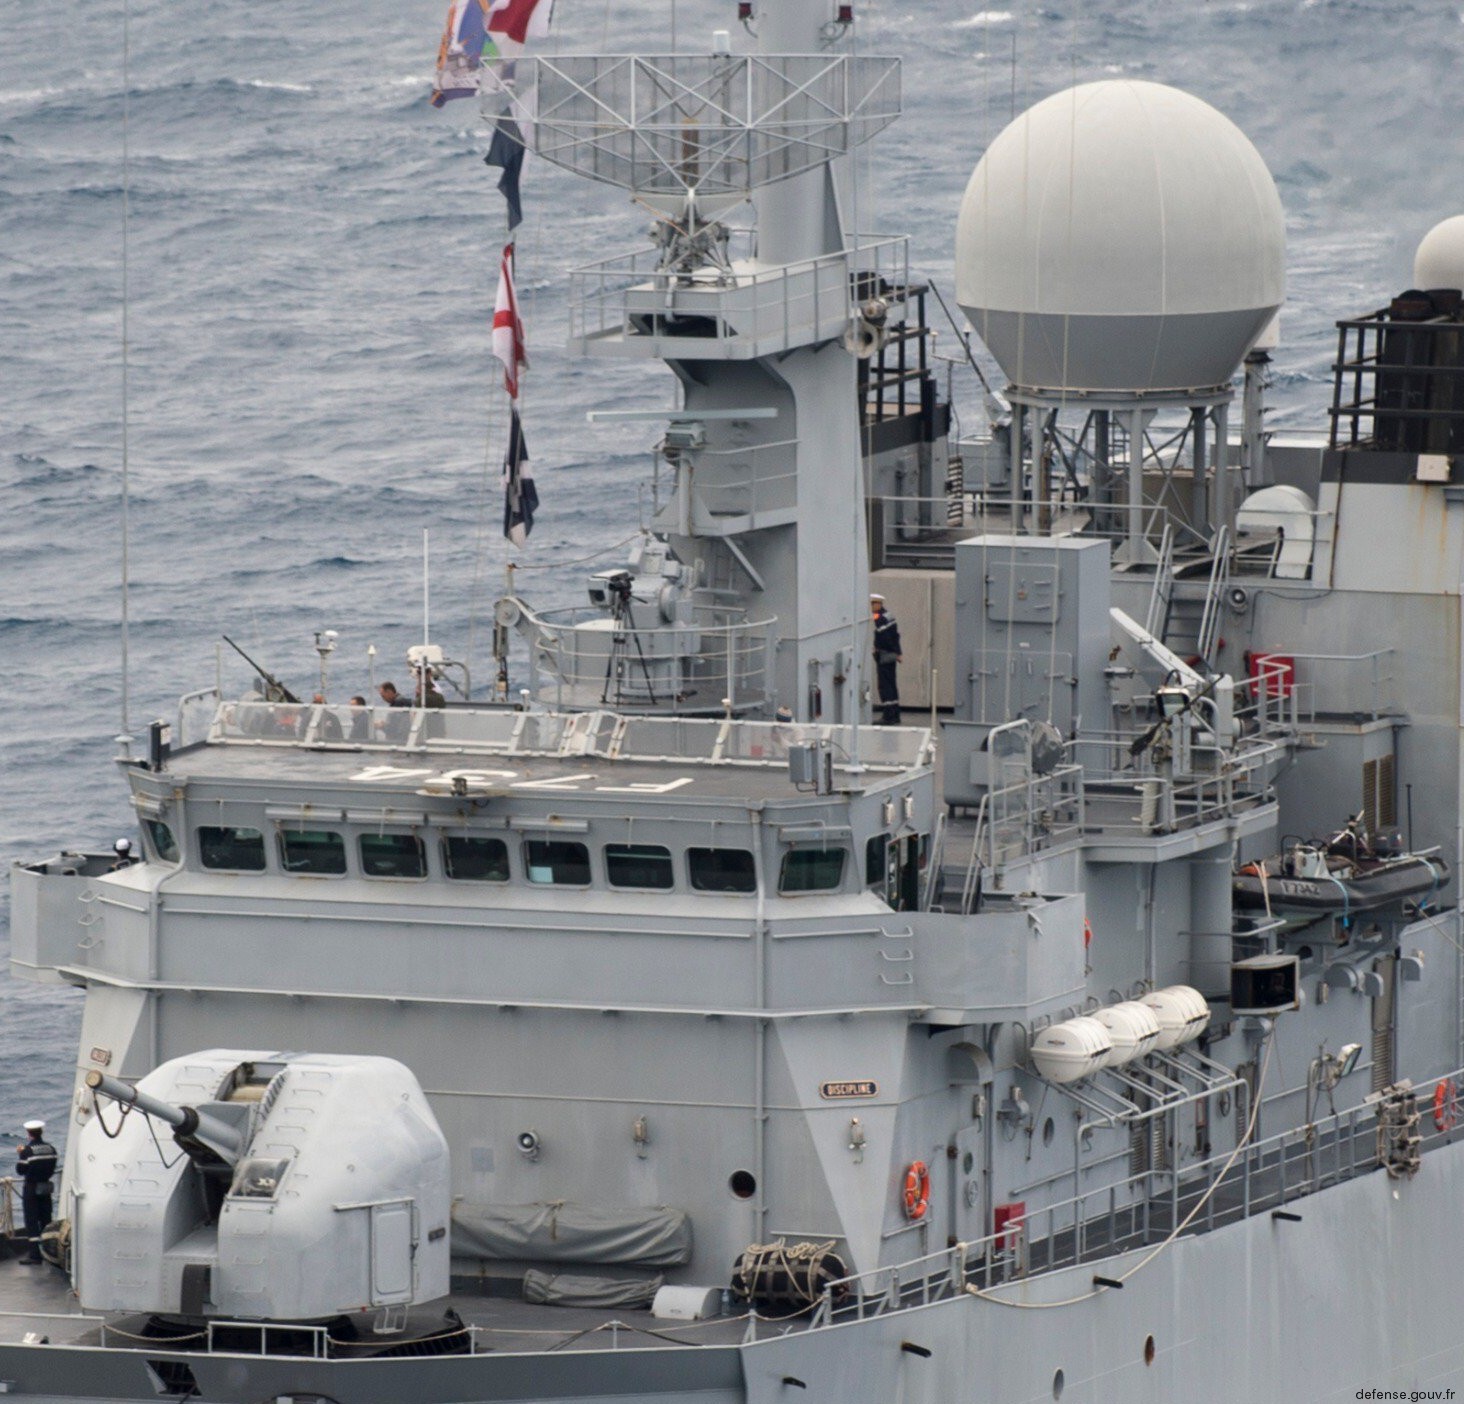 f-734 fs vendemiaire floreal class frigate french navy fregate surveillance marine nationale 17a radar antenna details